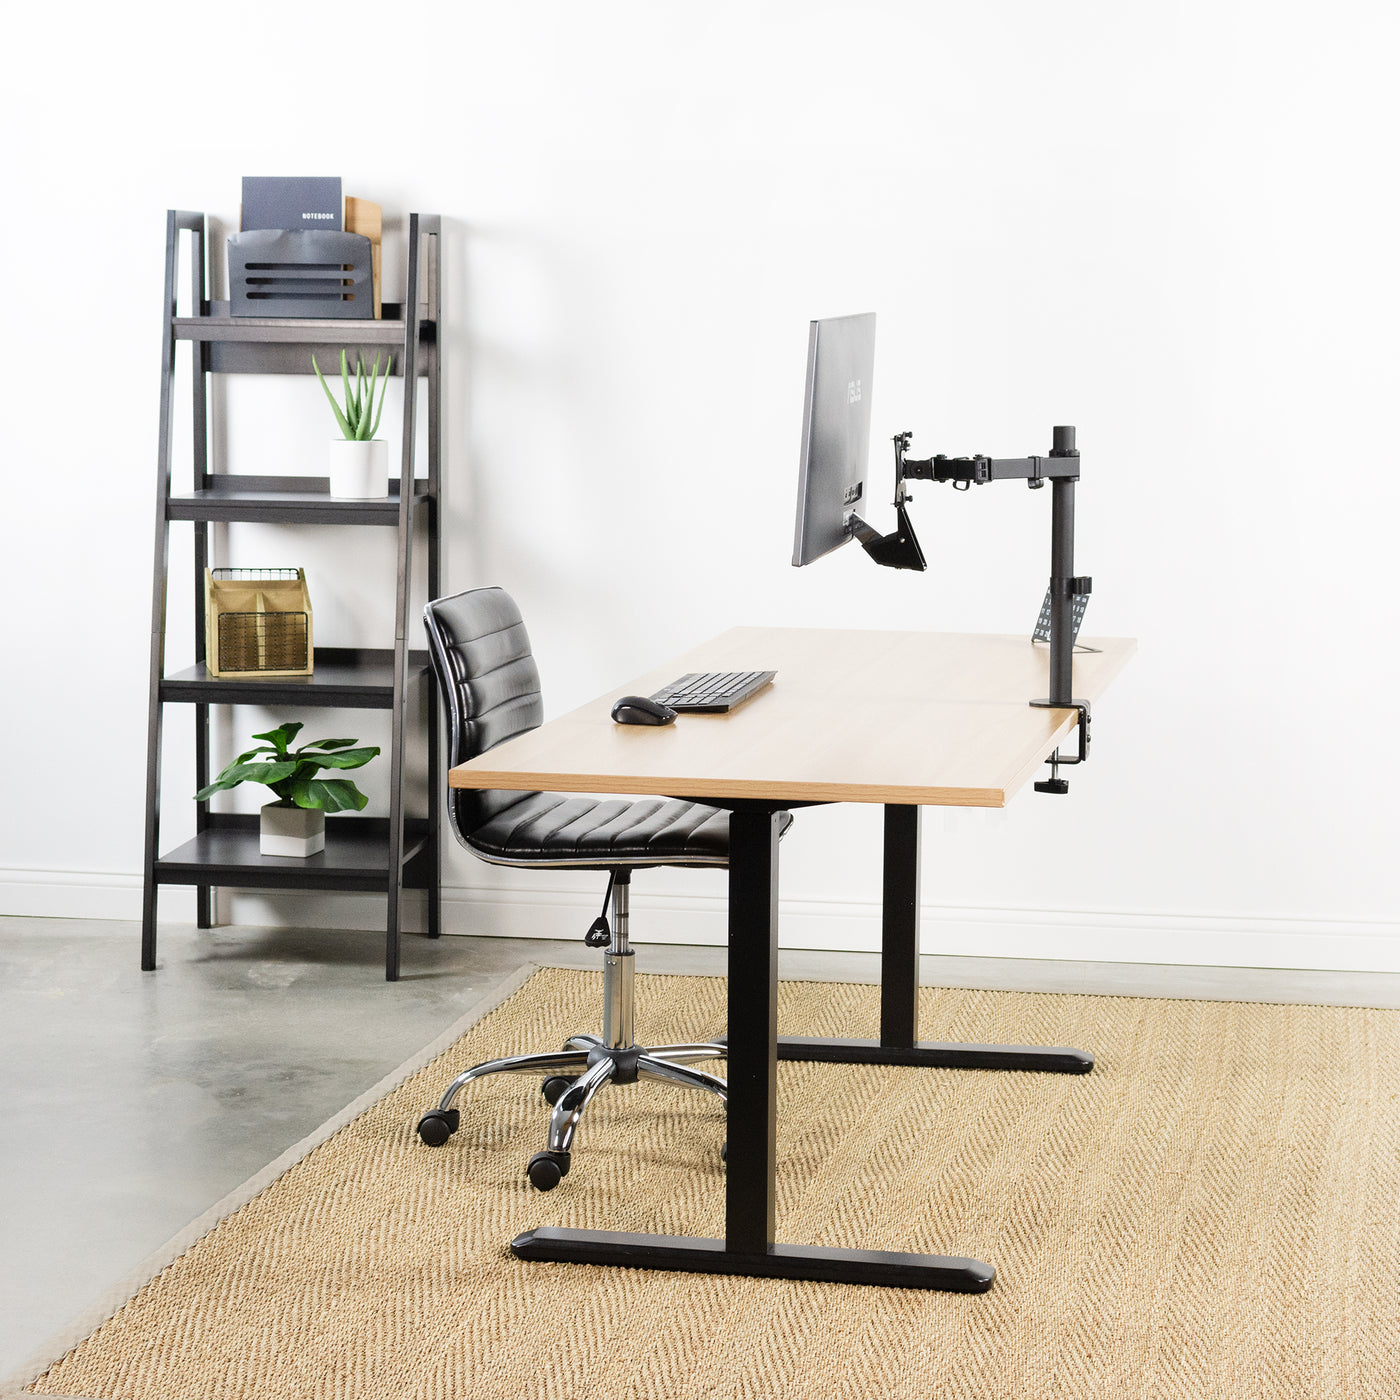 Modern ergonomic office set up to maximize productivity.